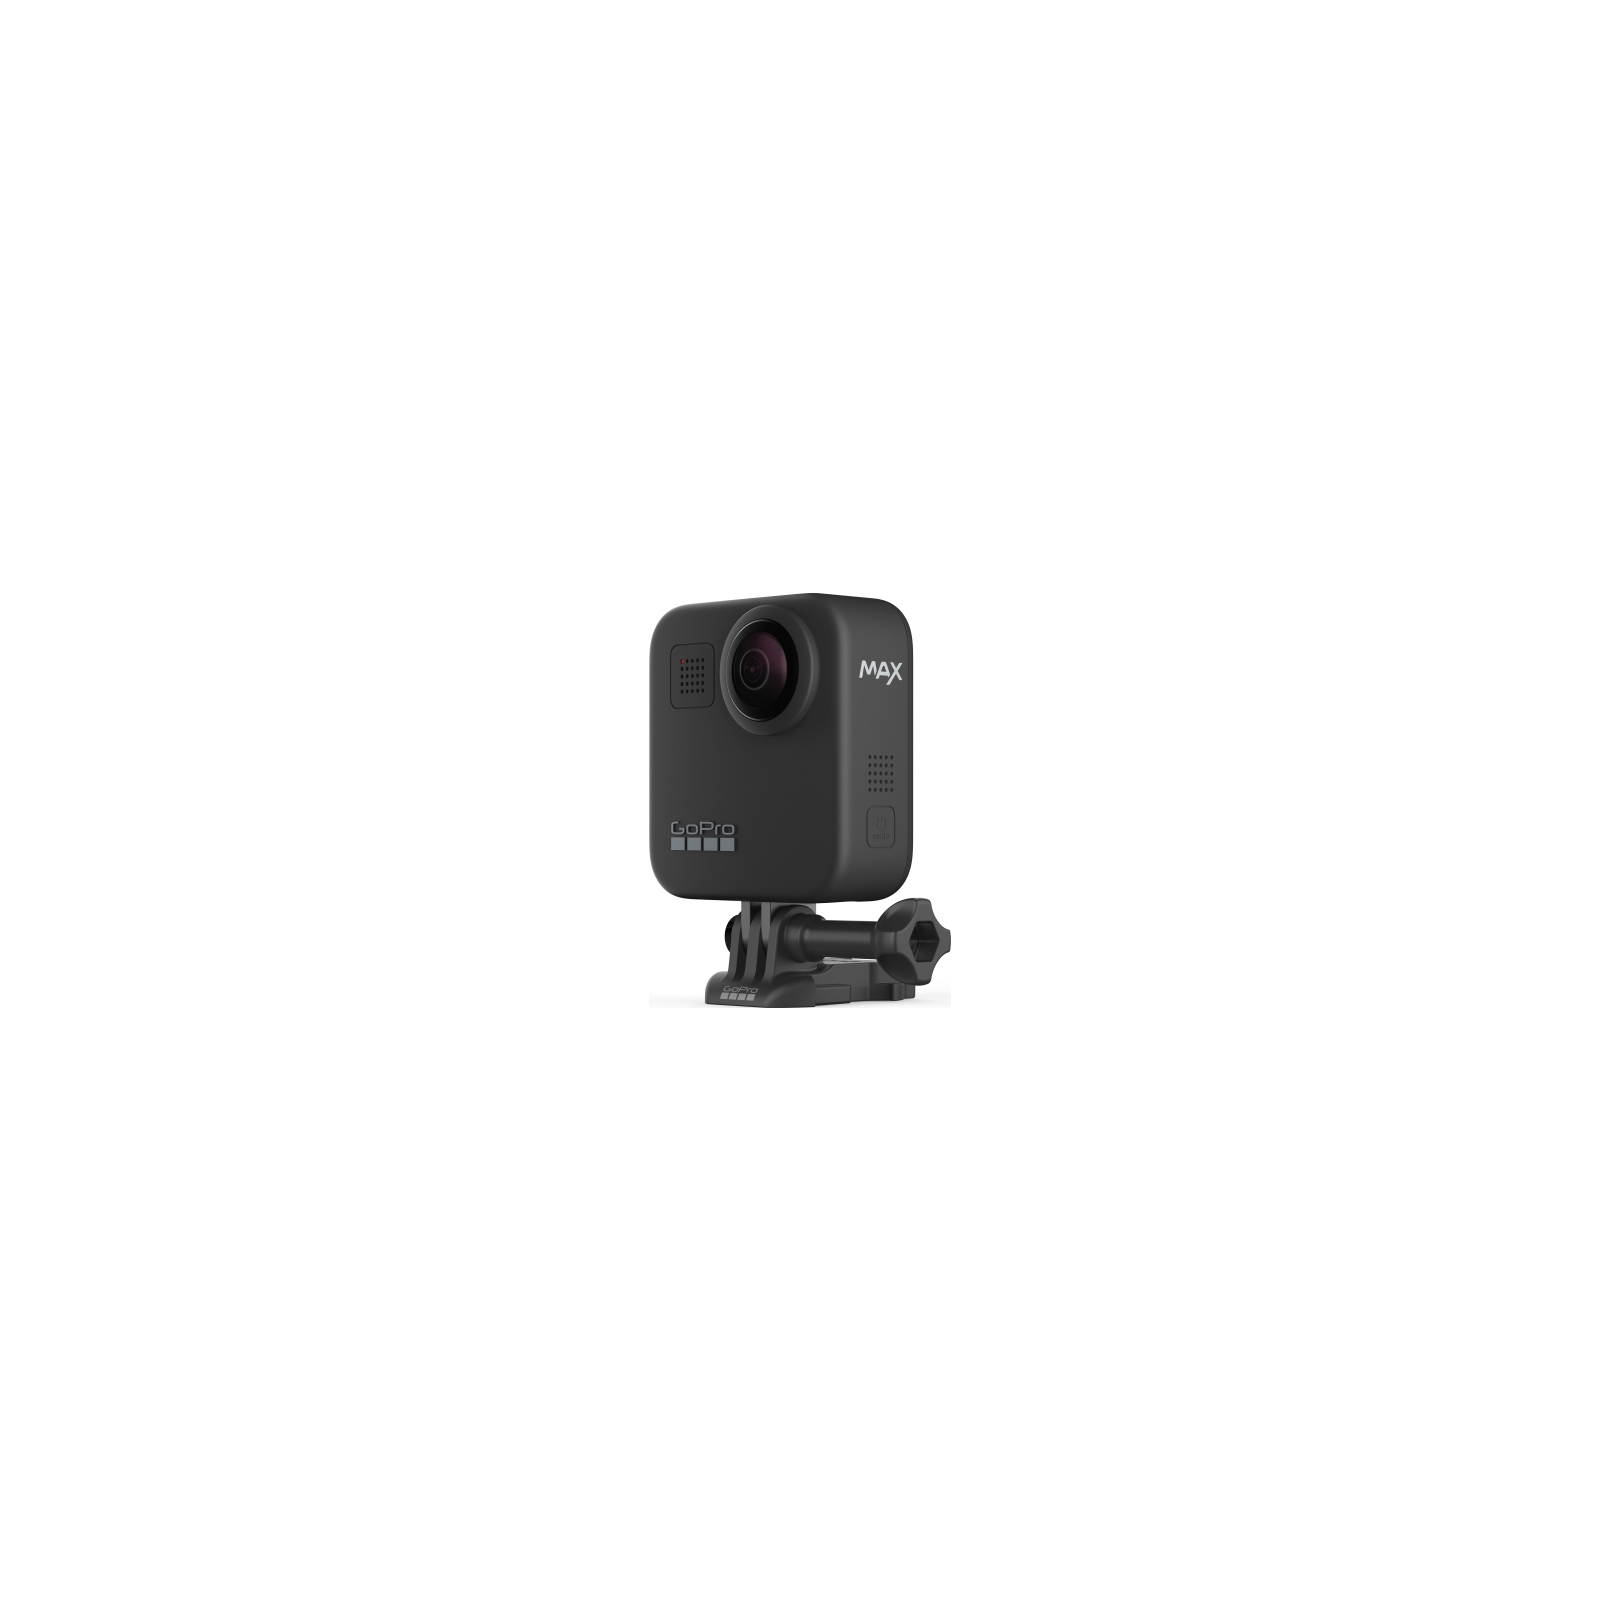 Экшн-камера GoPro MAX Black (CHDHZ-201-RW) изображение 7